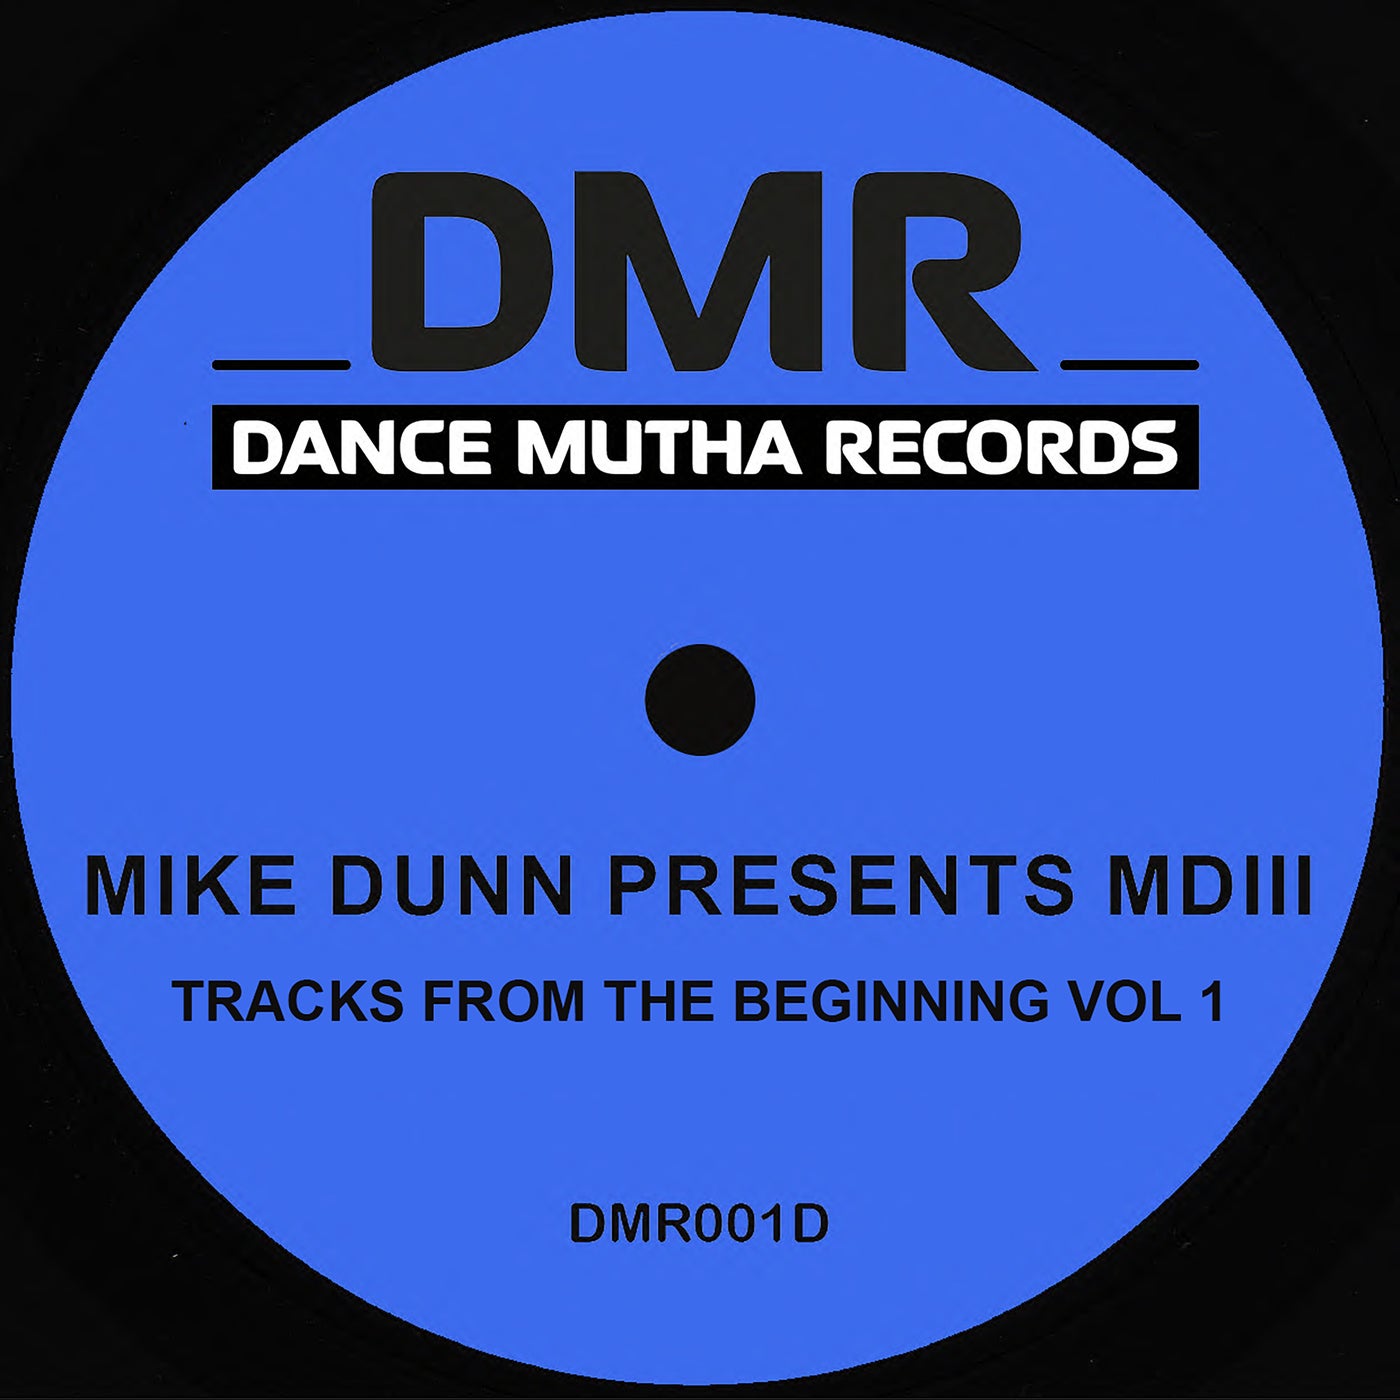 Mike Dunn Music & Downloads on Beatport